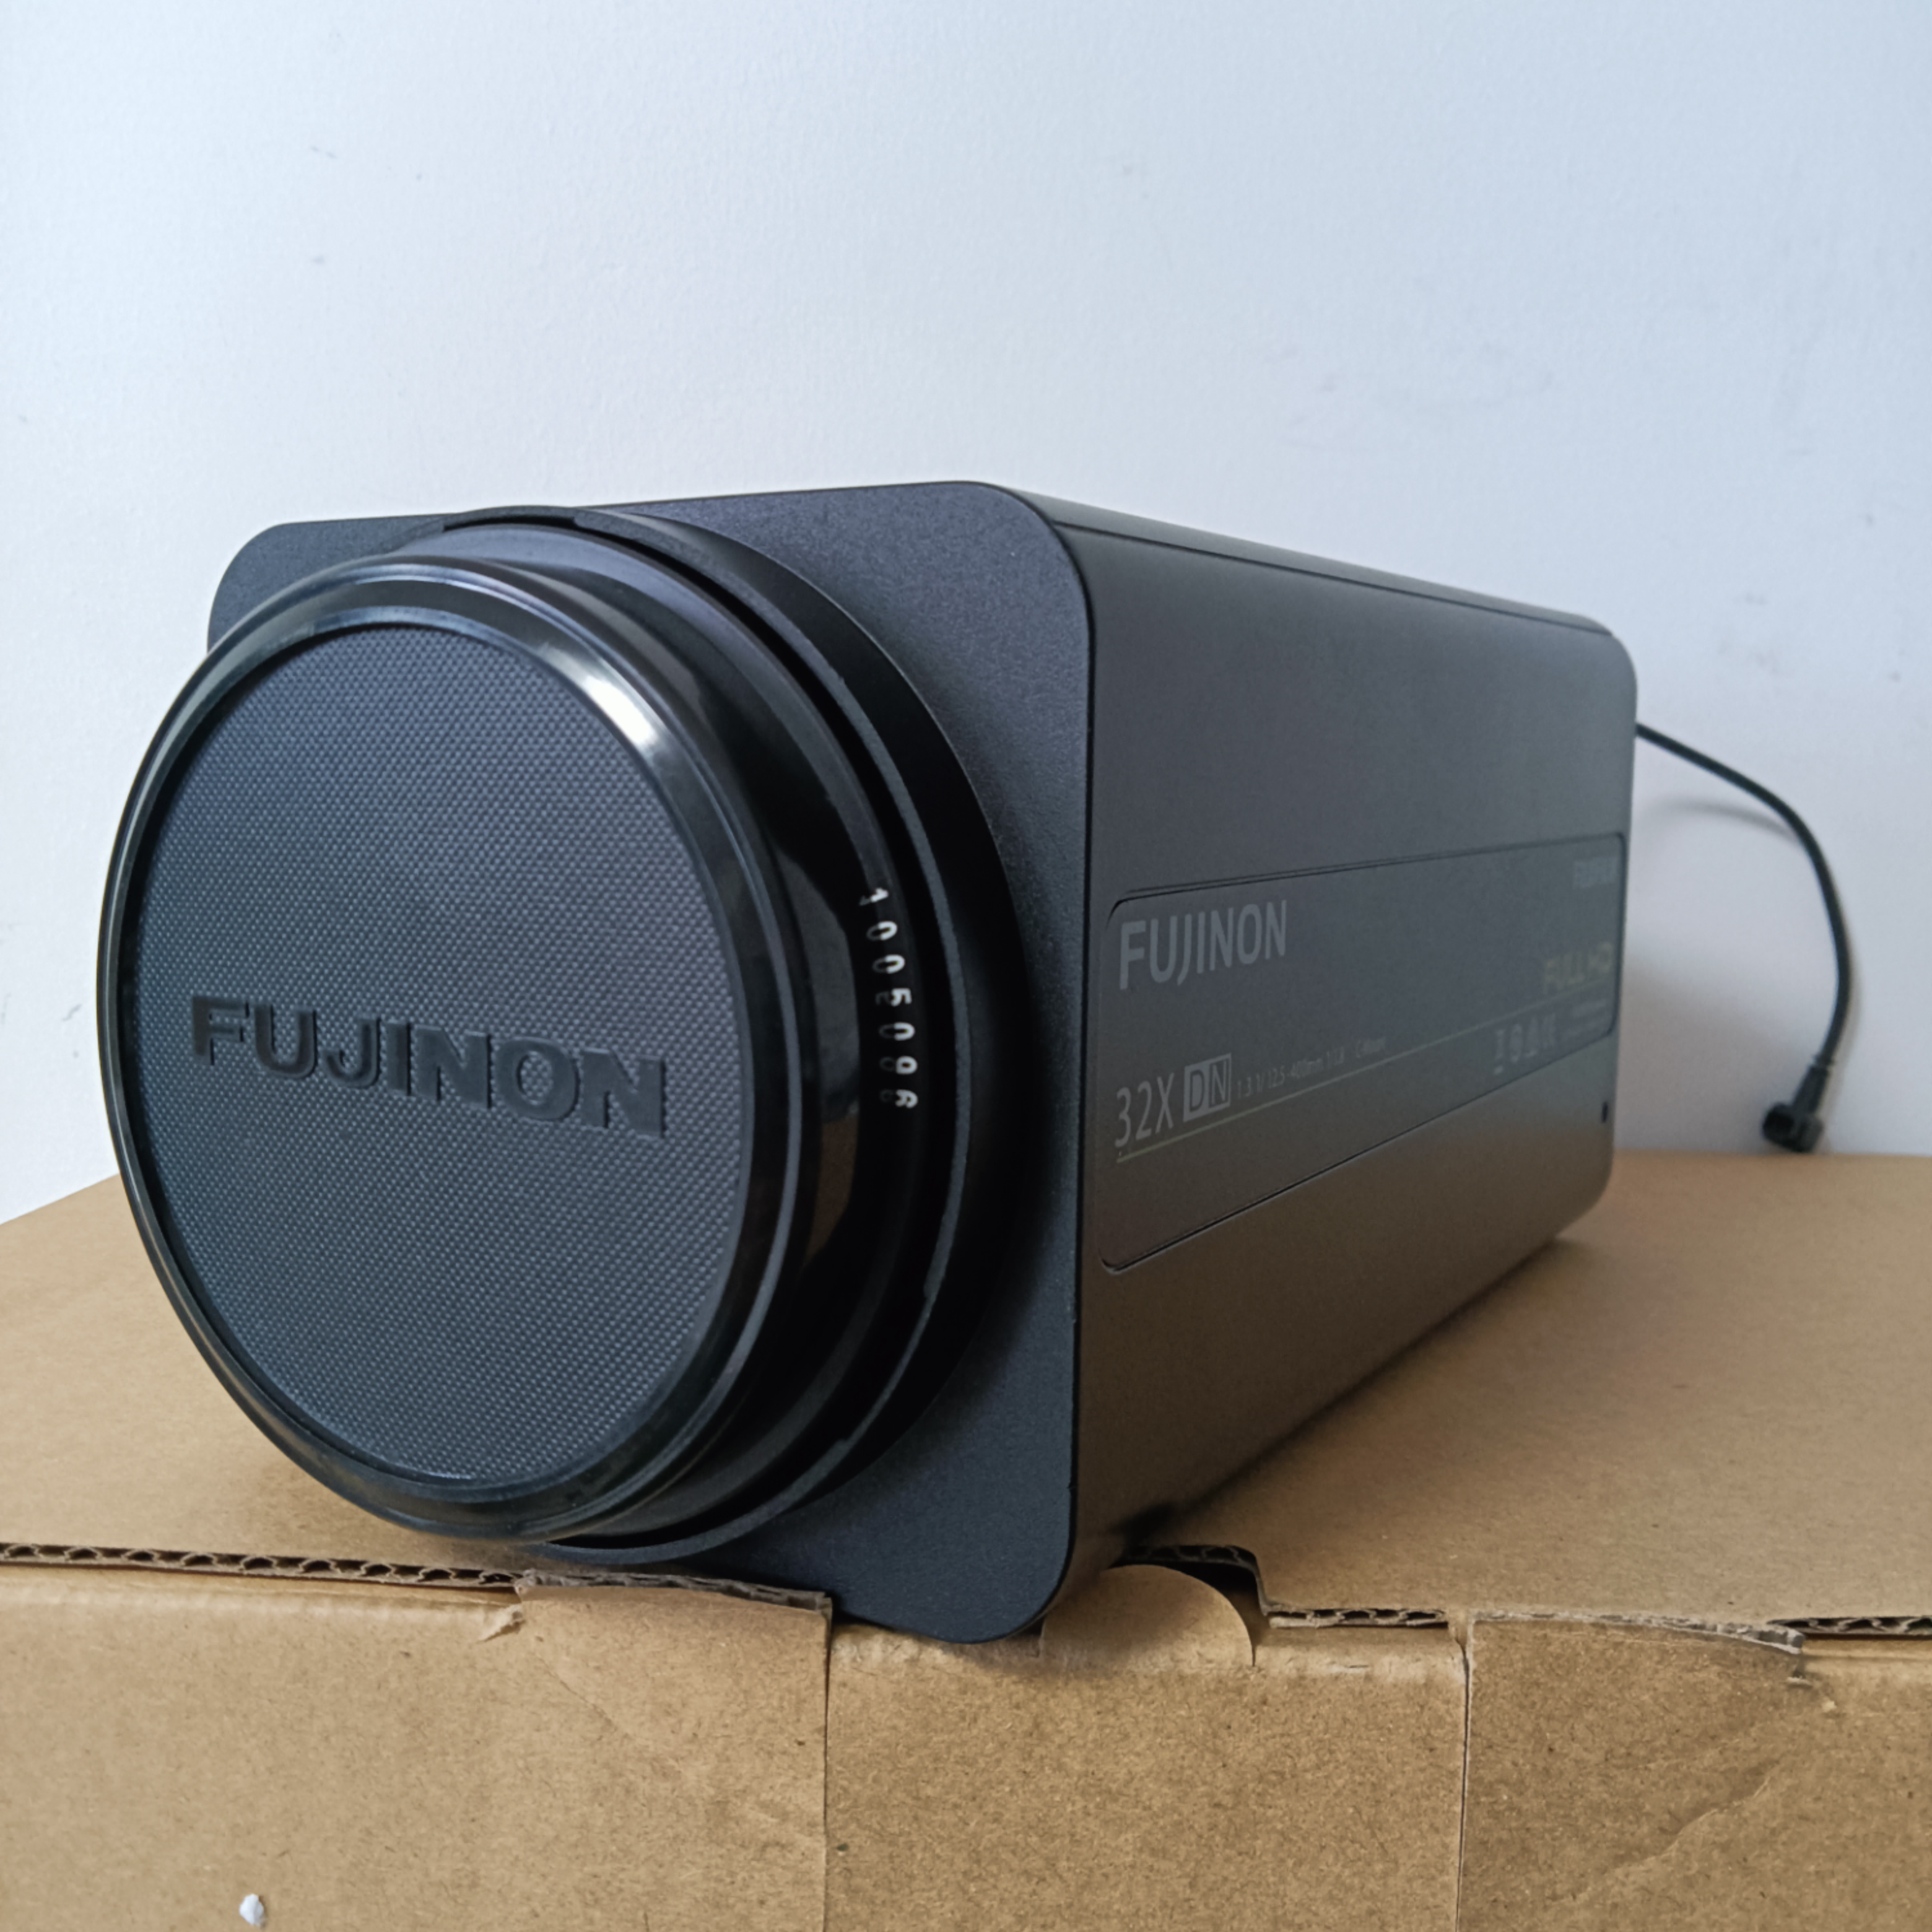 FUJINON富士能FD32x12.5SR4A-CV1电动变焦透雾镜头